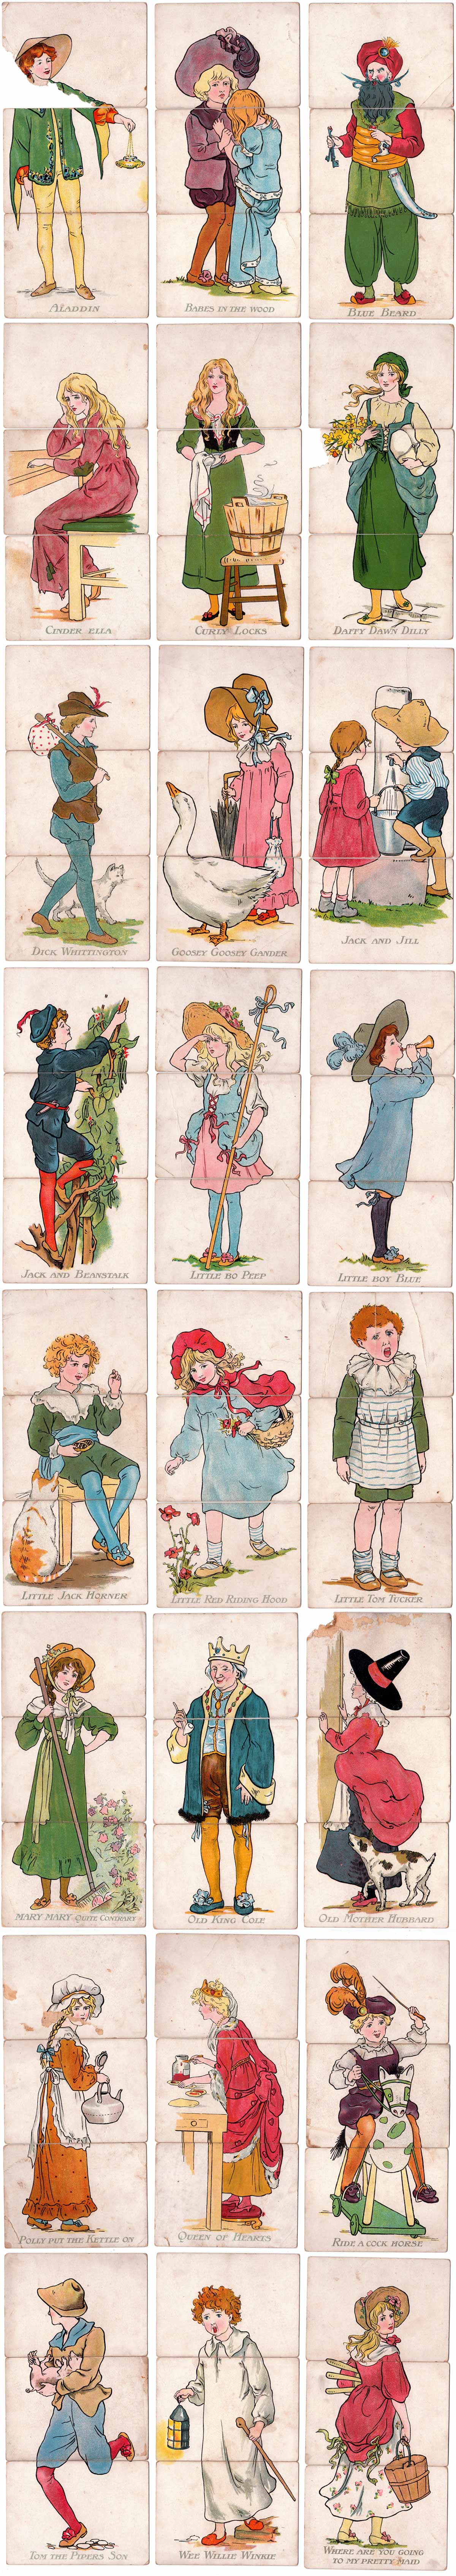 Nursery Rhymes Misfitz by C. W. Faulkner & Co, c.1900